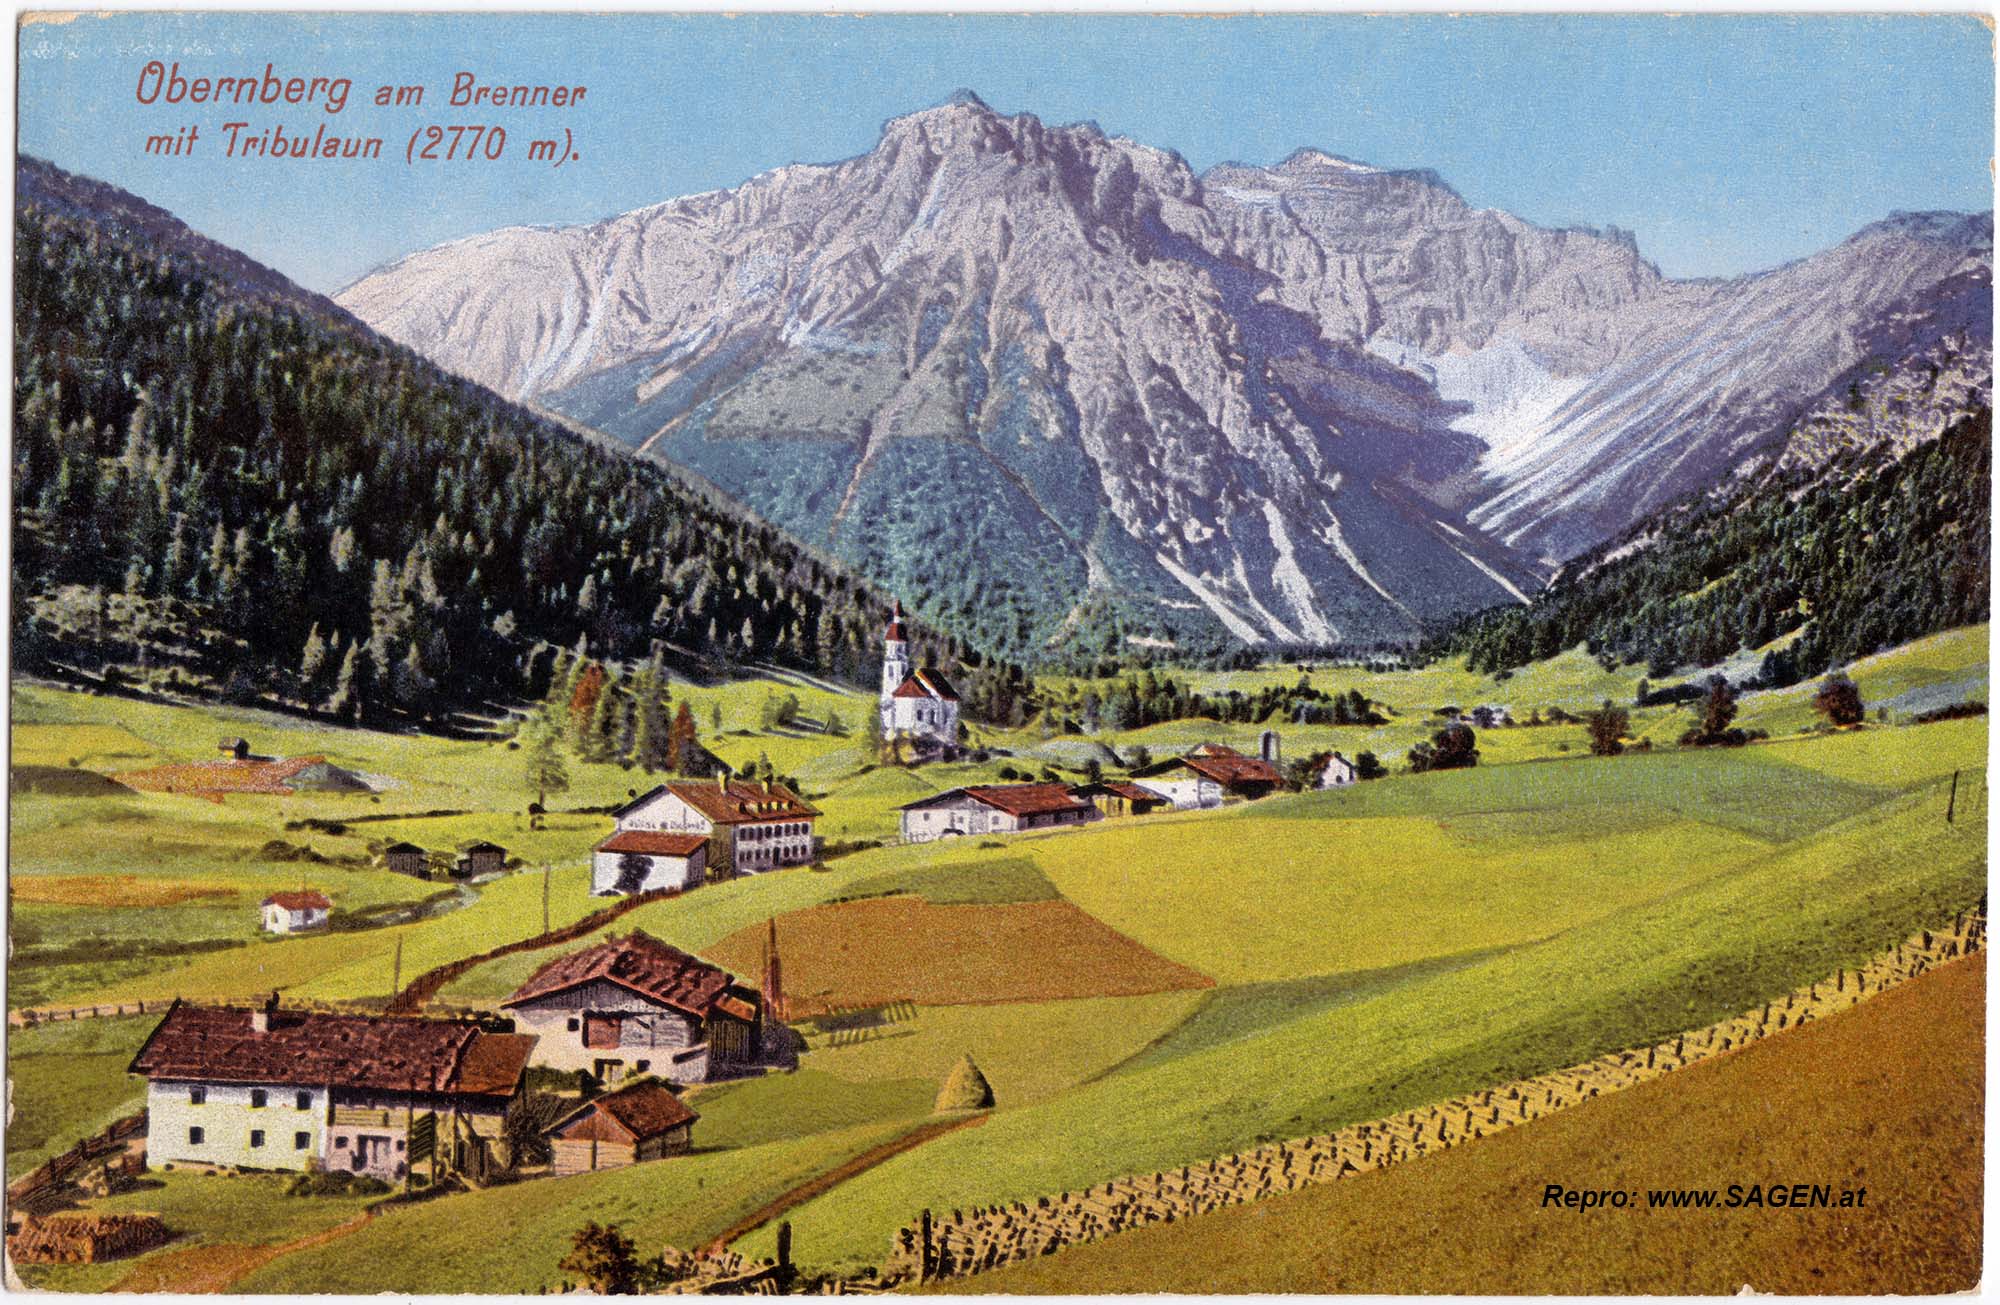 Obernberg am Brenner mit Tribulaun (2770 m)